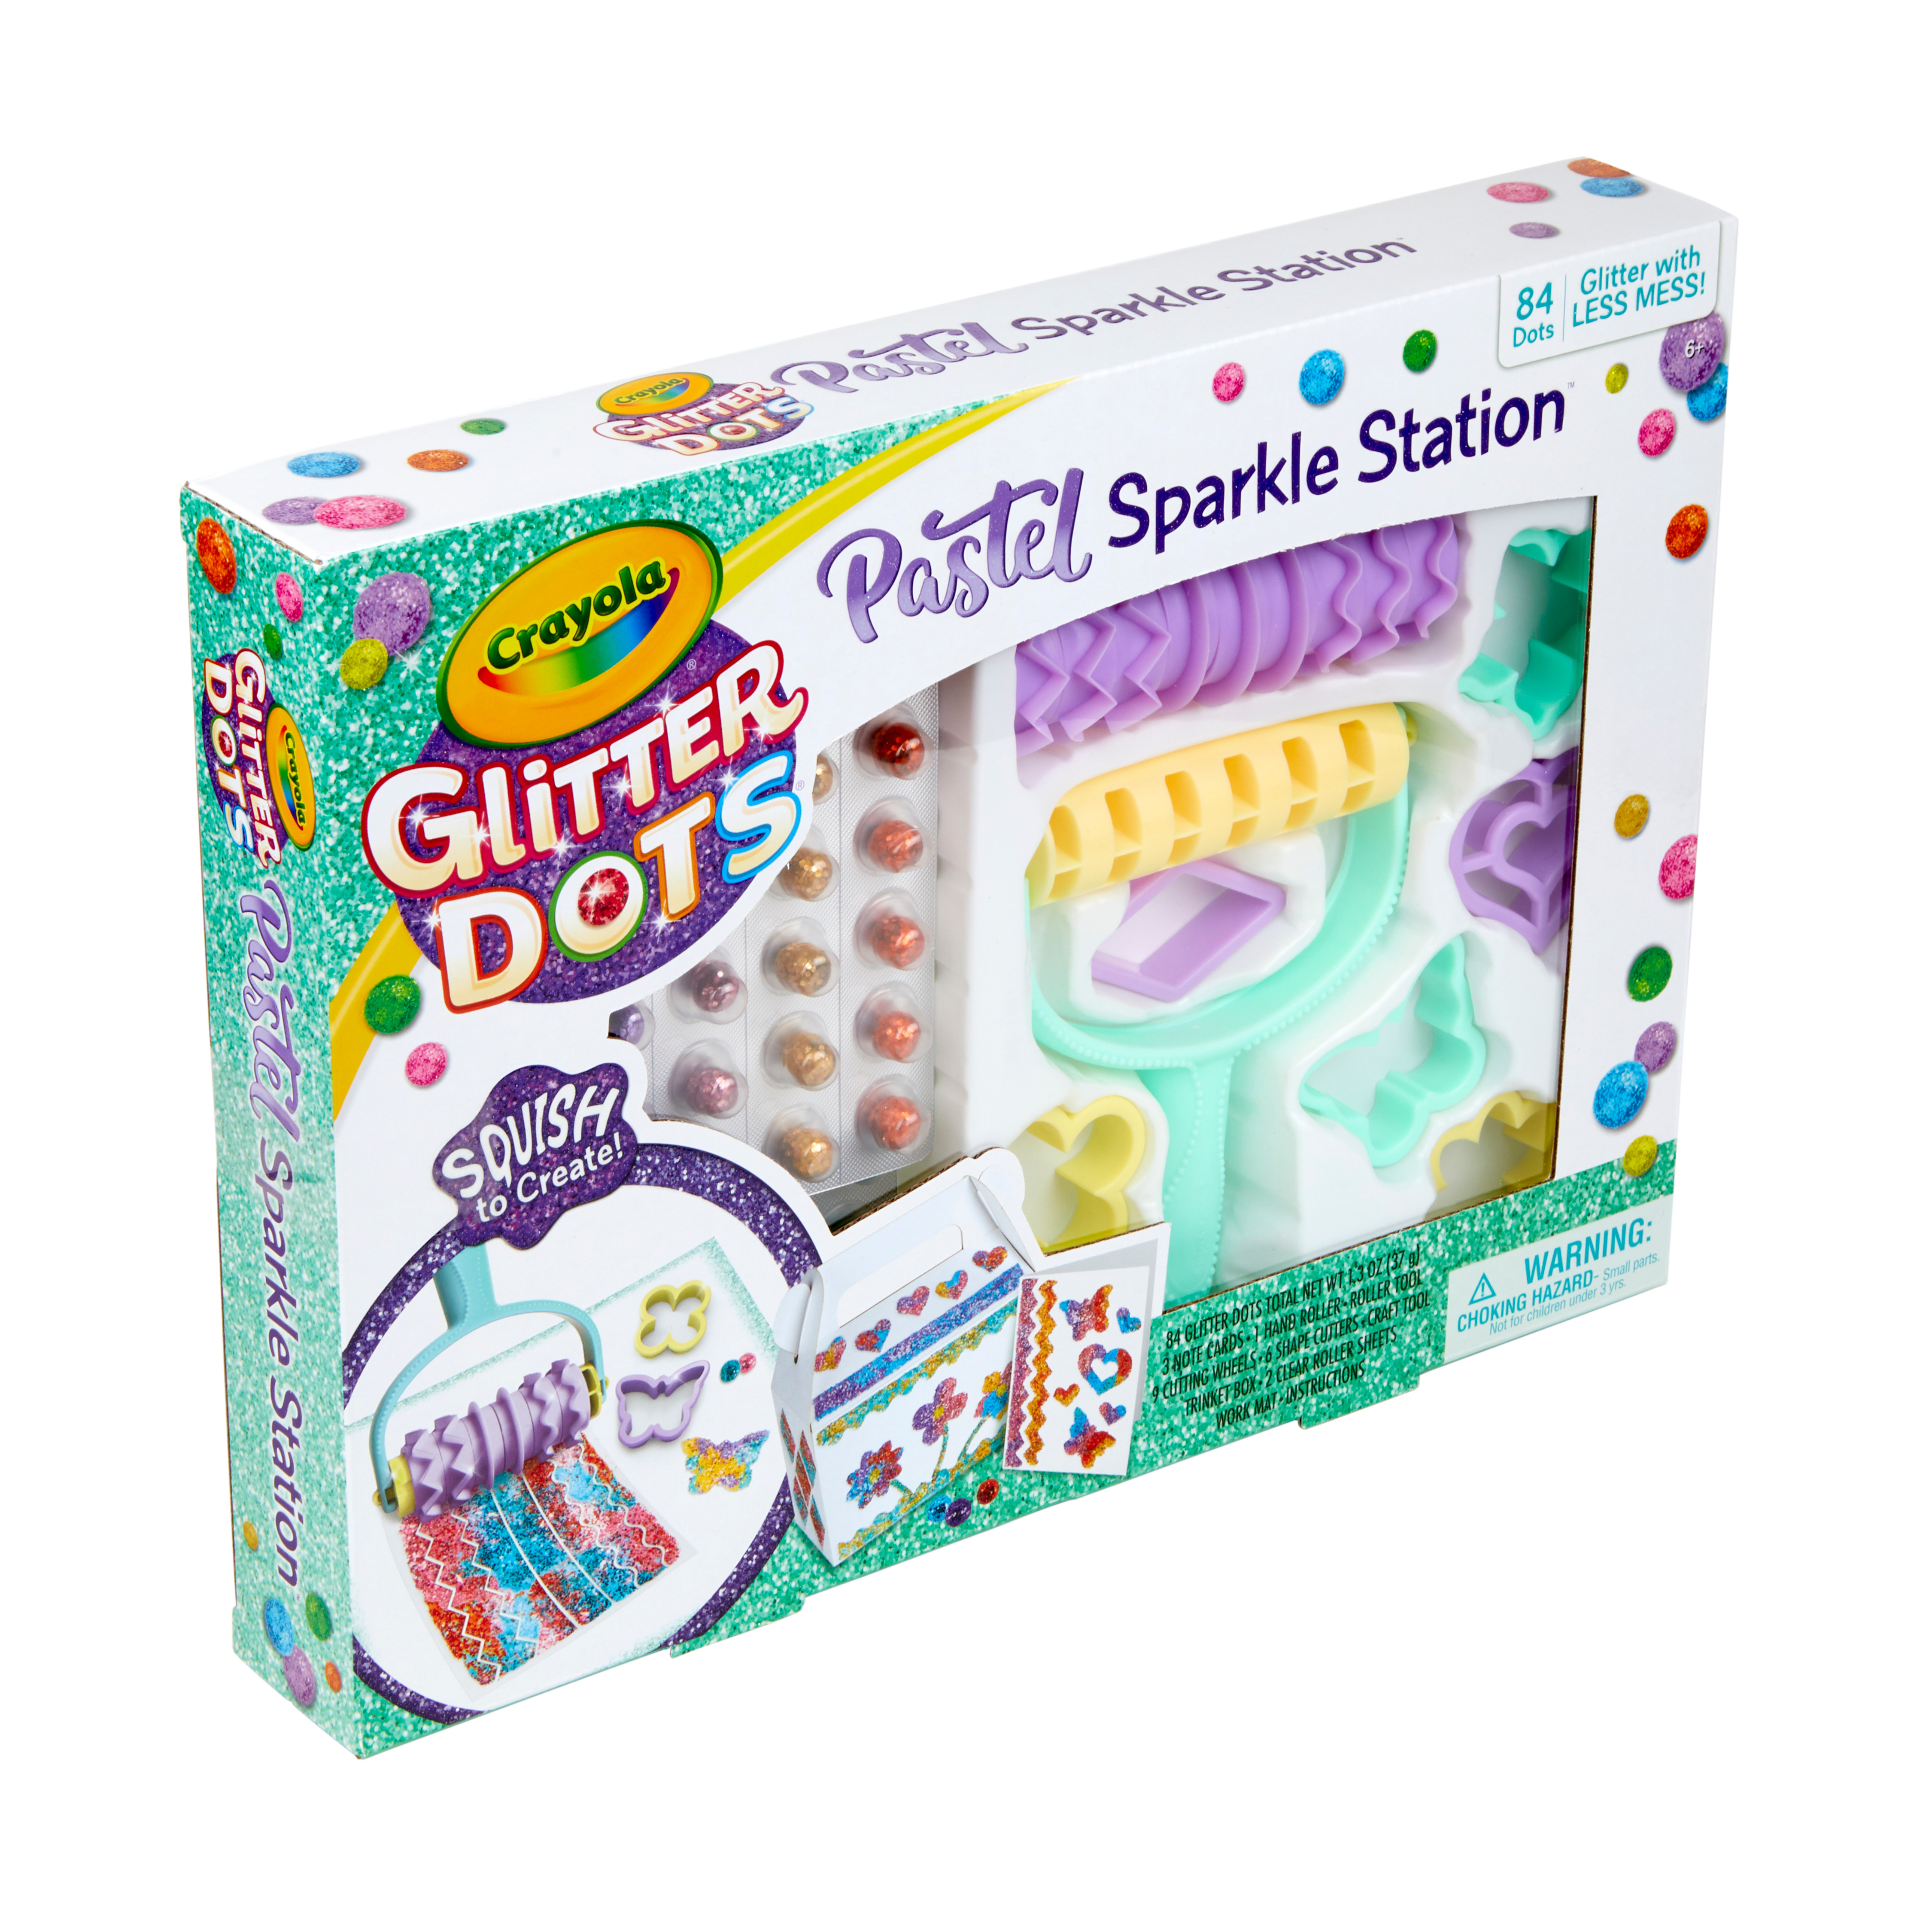 Crayola Glitter Dots Sparkle Station 100 Pieces Craft Set, Child, Ages 3+ Unisex - image 4 of 8